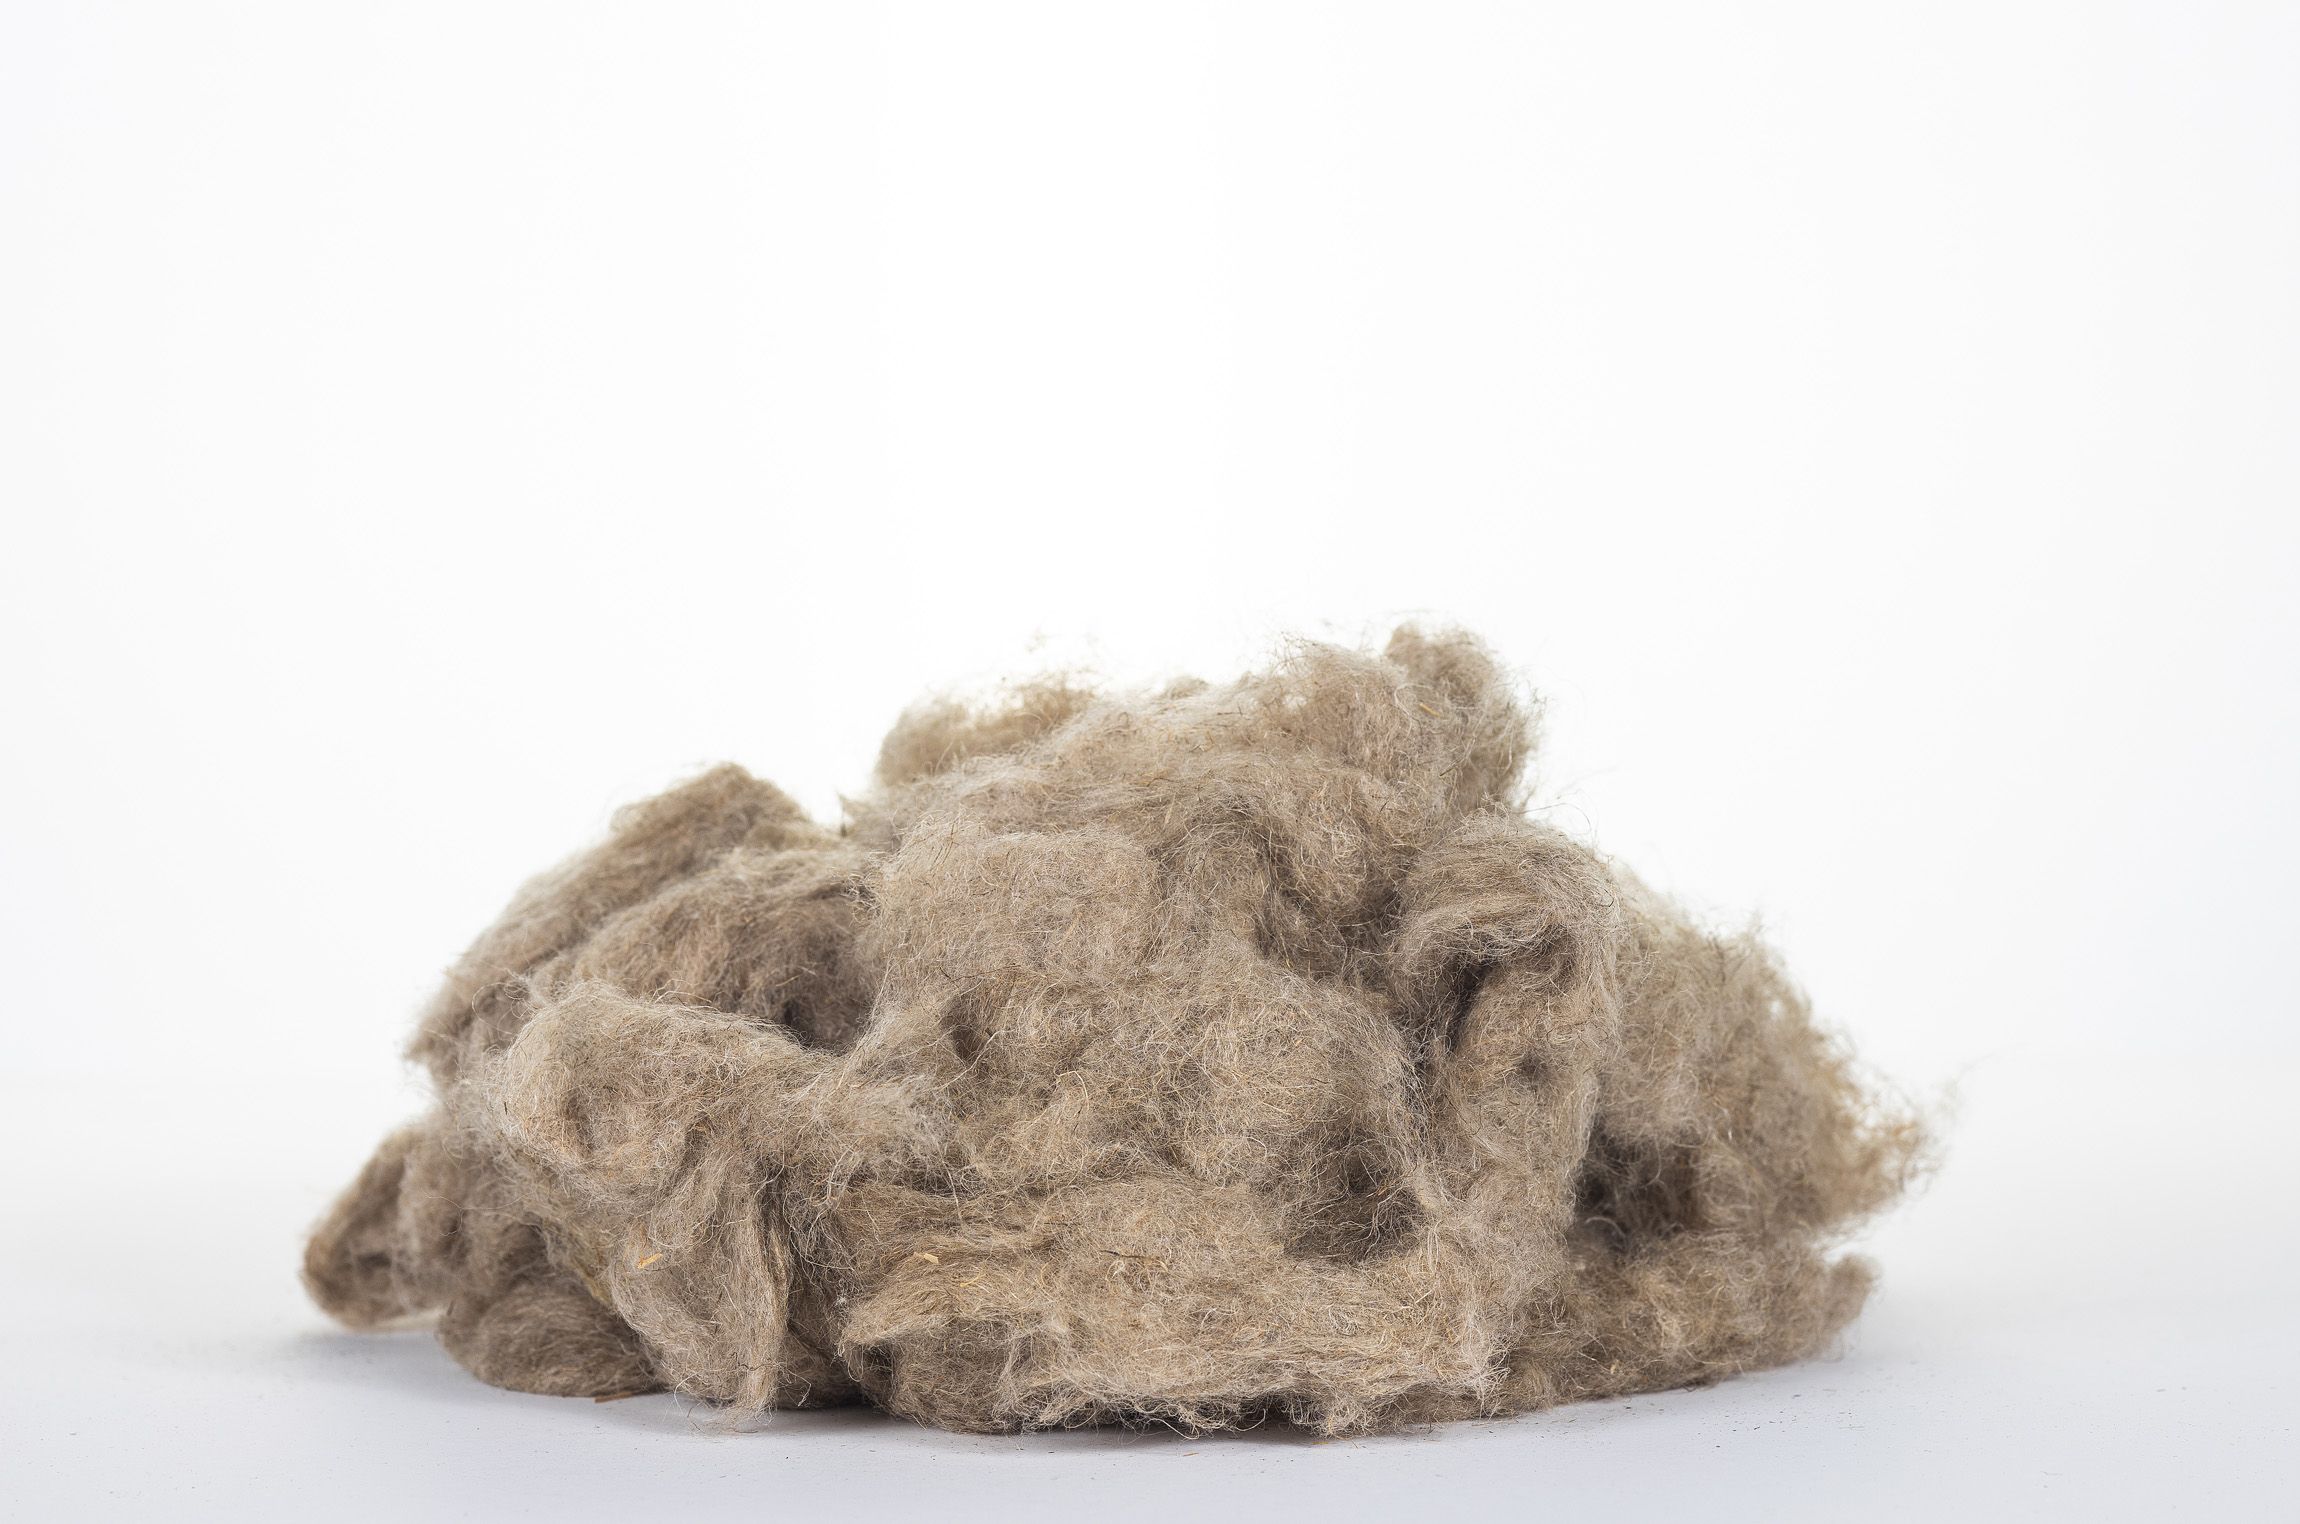 Cottonized flax fiber